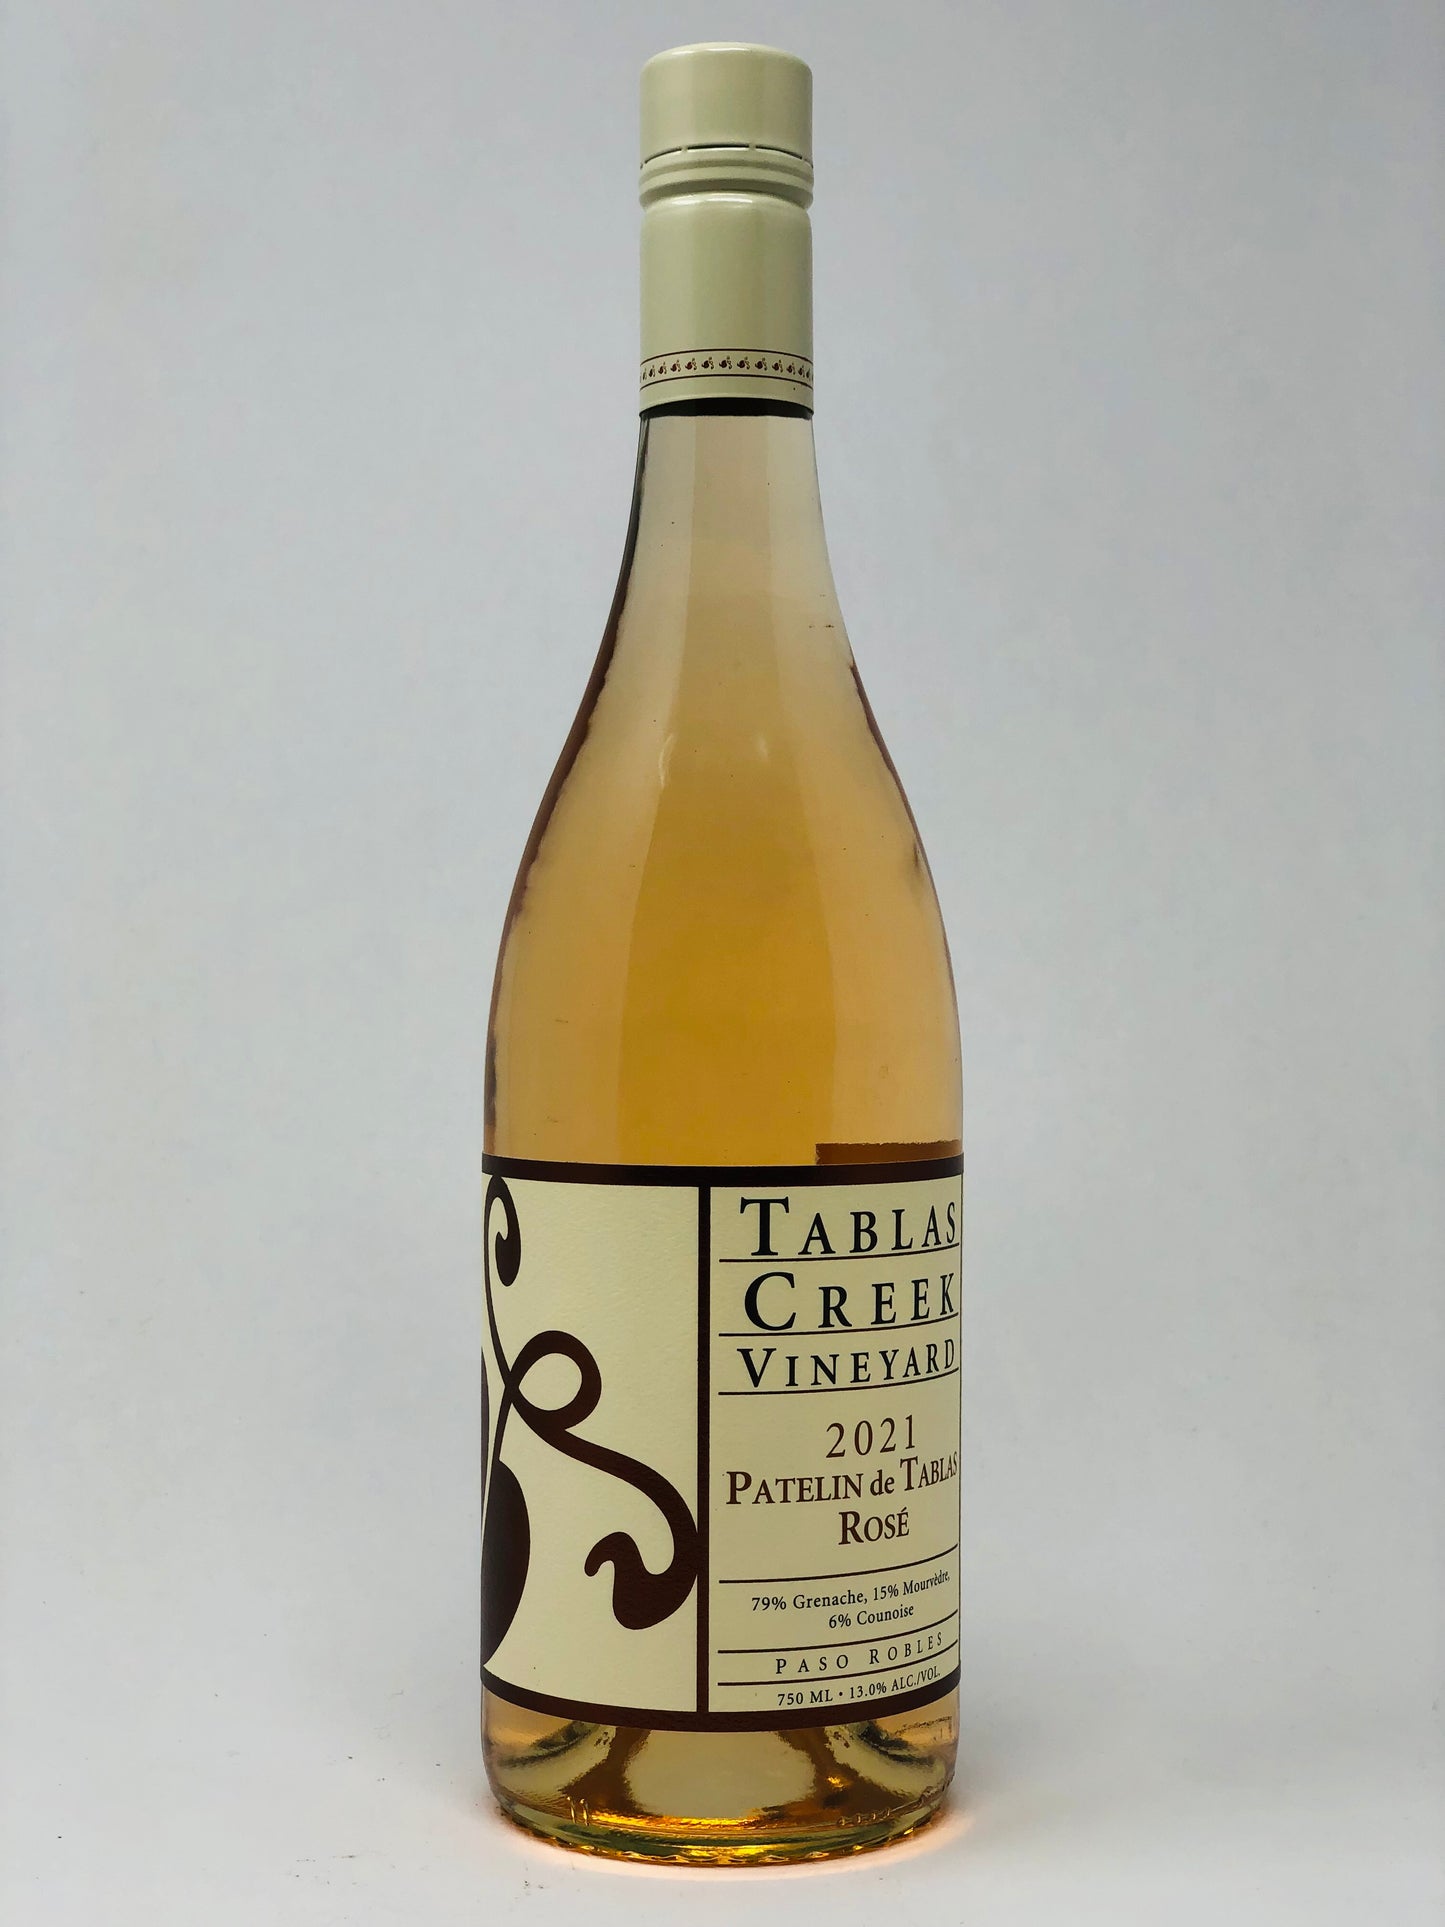 Tablas Creek Vineyard, Patelin de Tablas Rosé Paso Robles (2021)